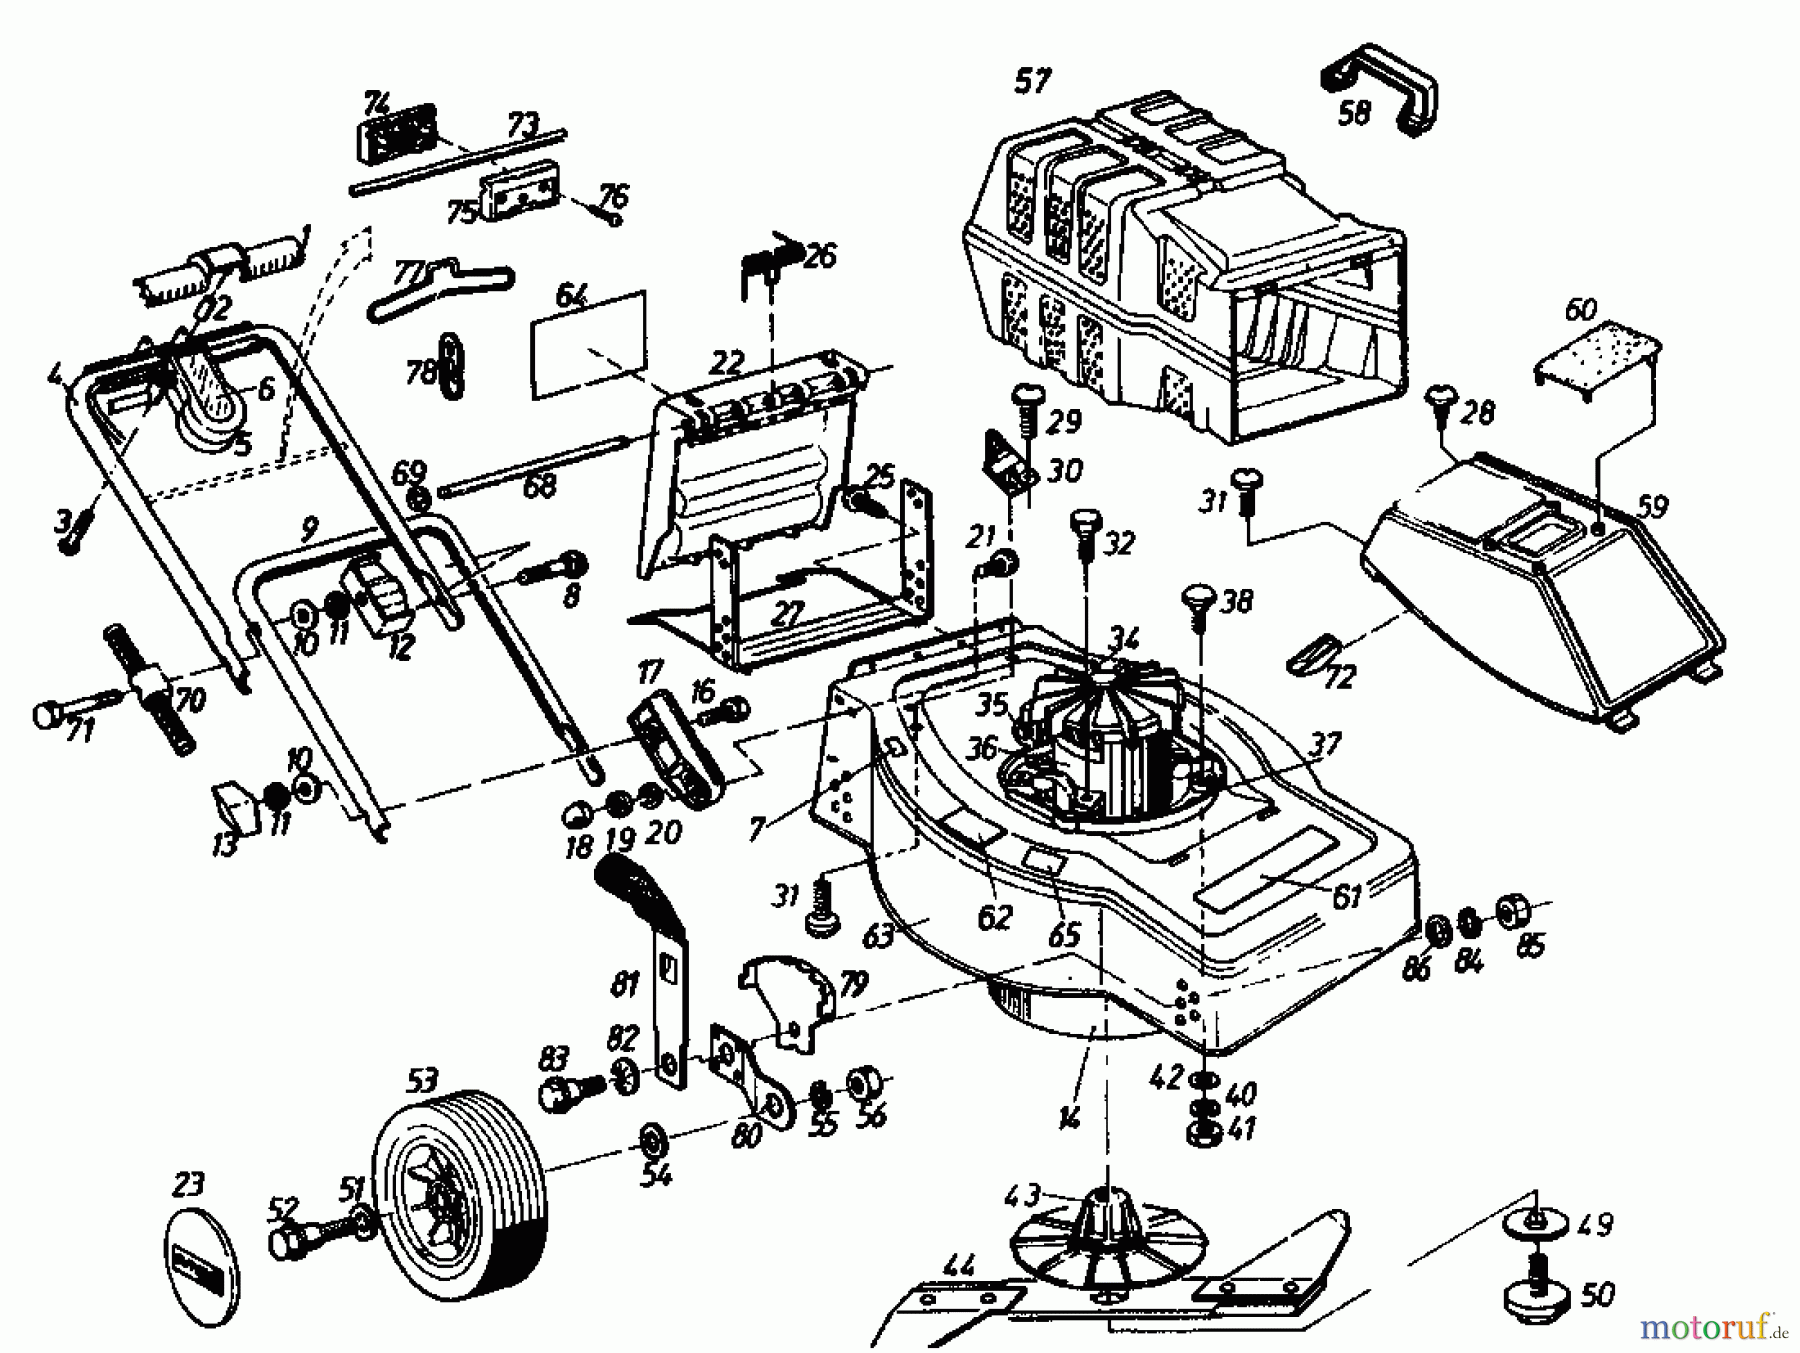  Gutbrod Electric mower TURBO HE 02899.04  (1993) Basic machine